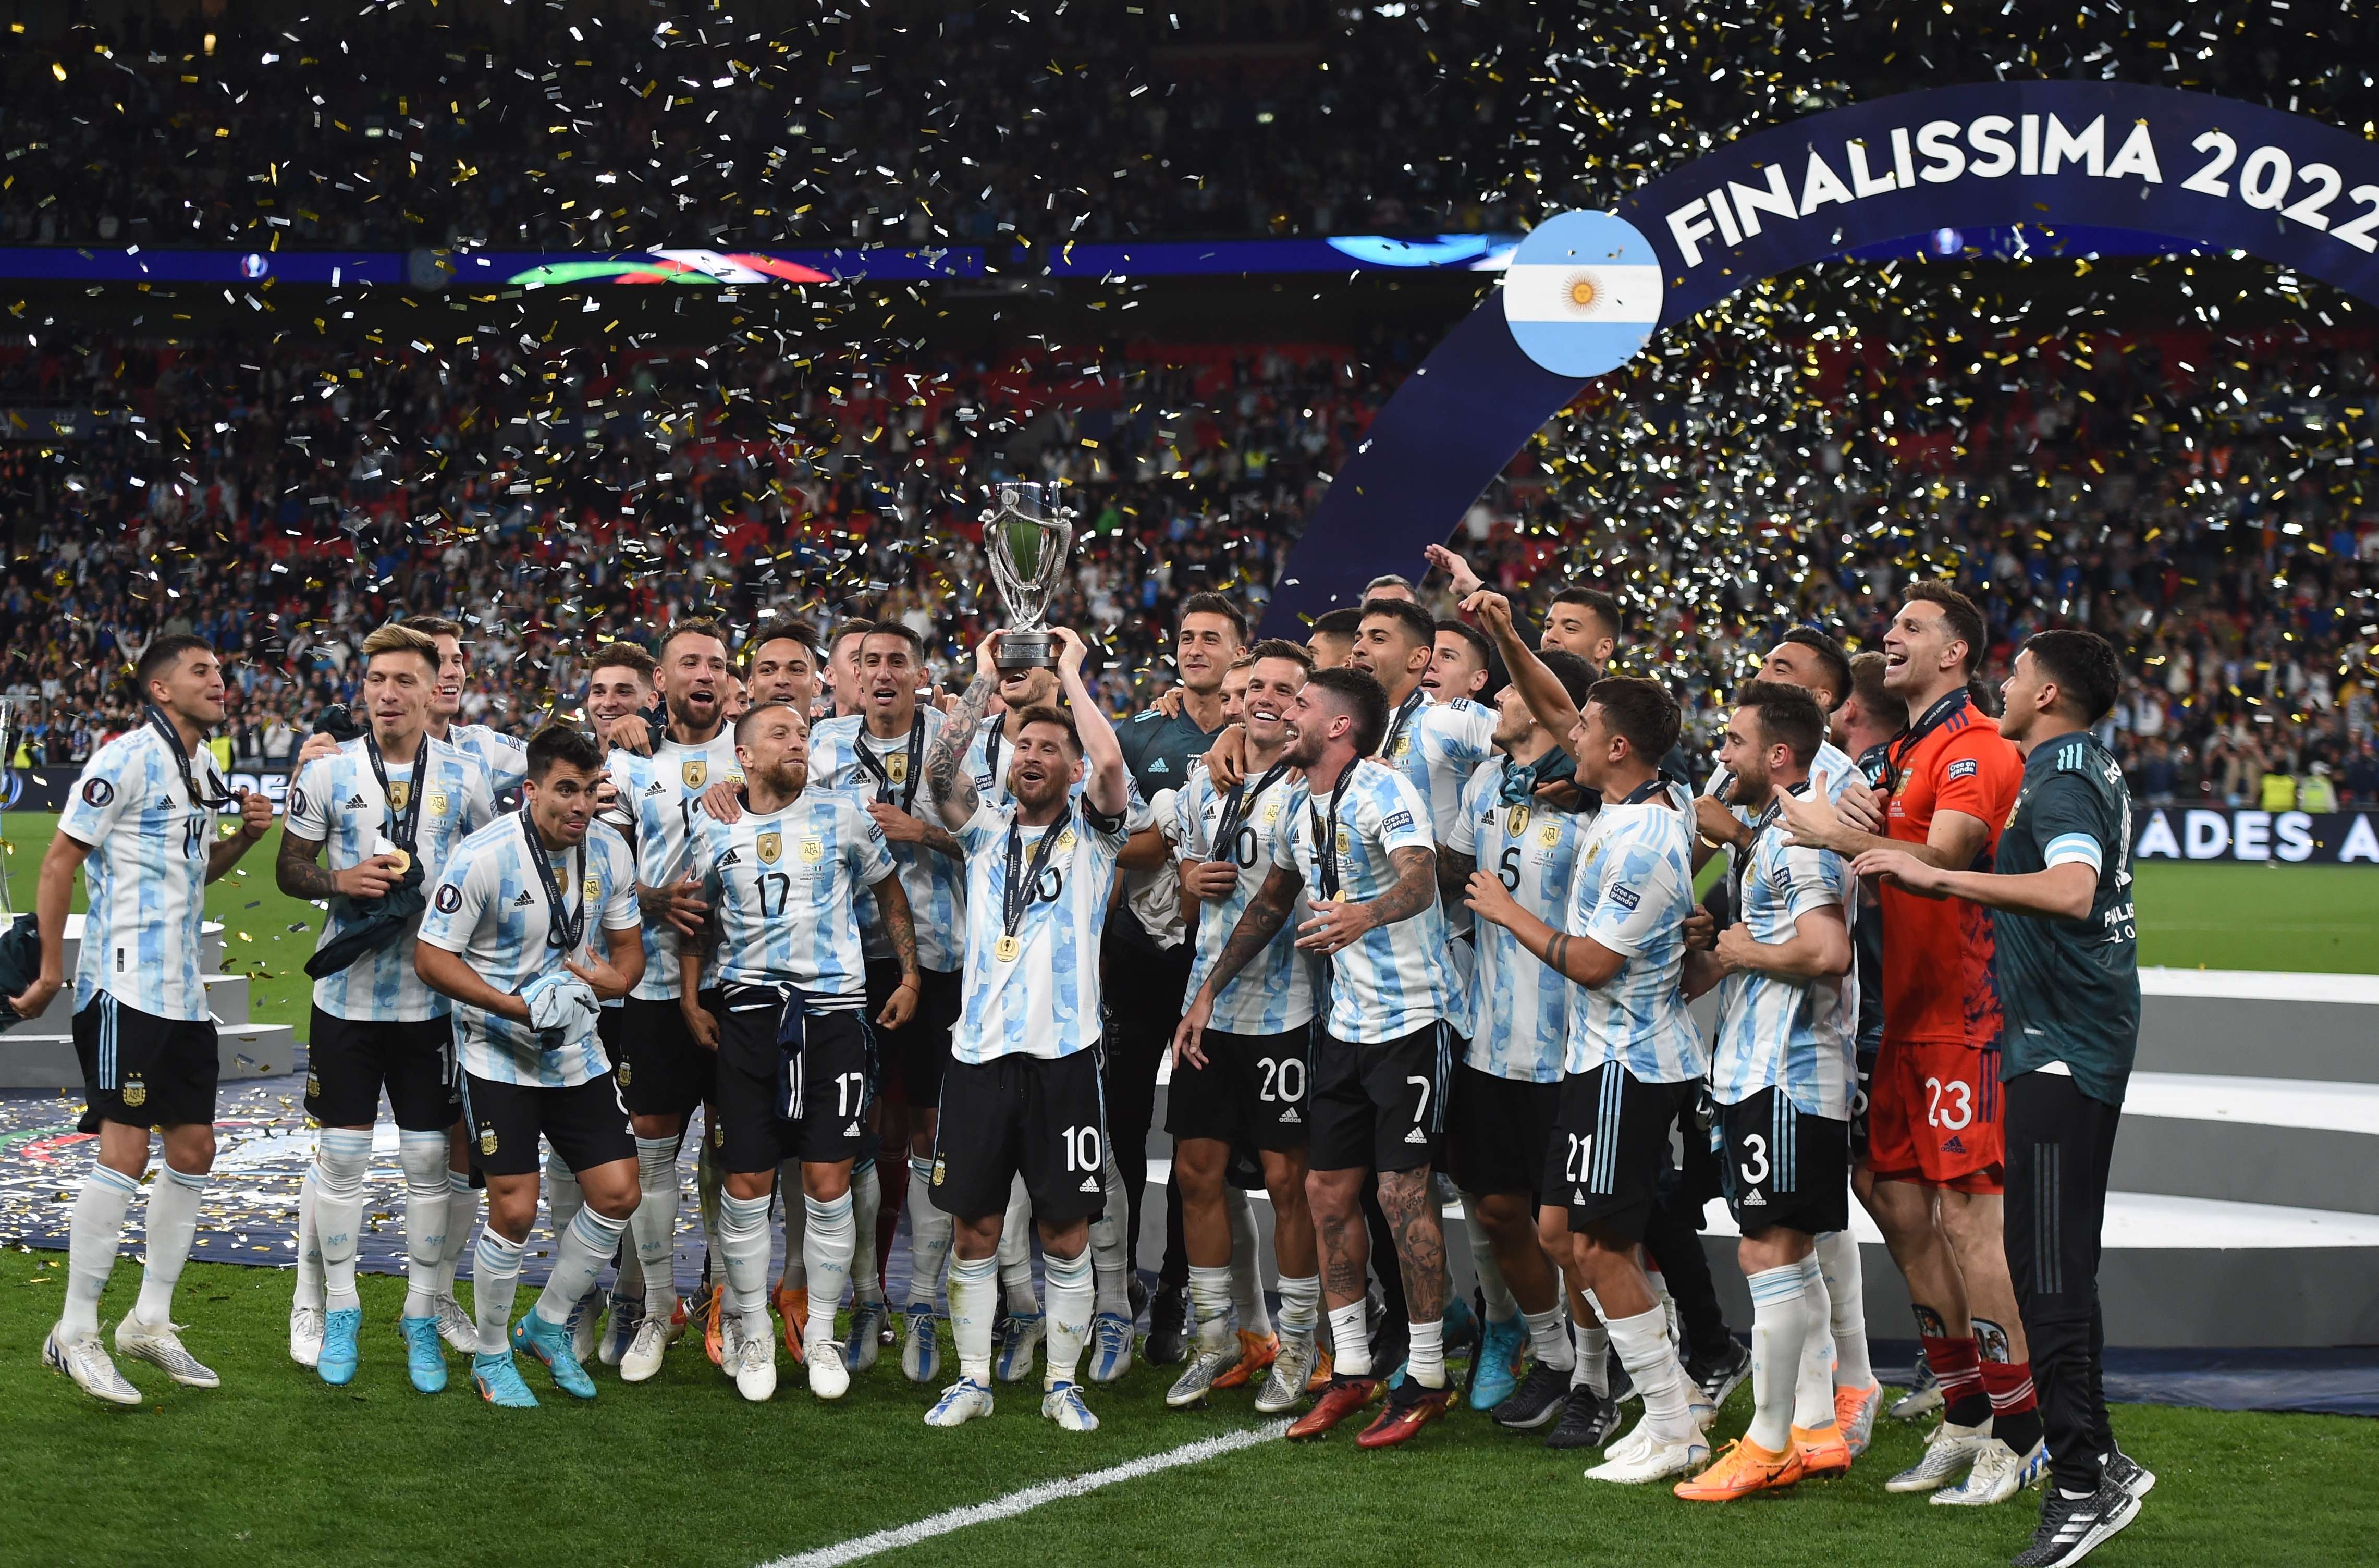 Lionel Messi levantó otra Copa con Argentina. /Foto: EFE